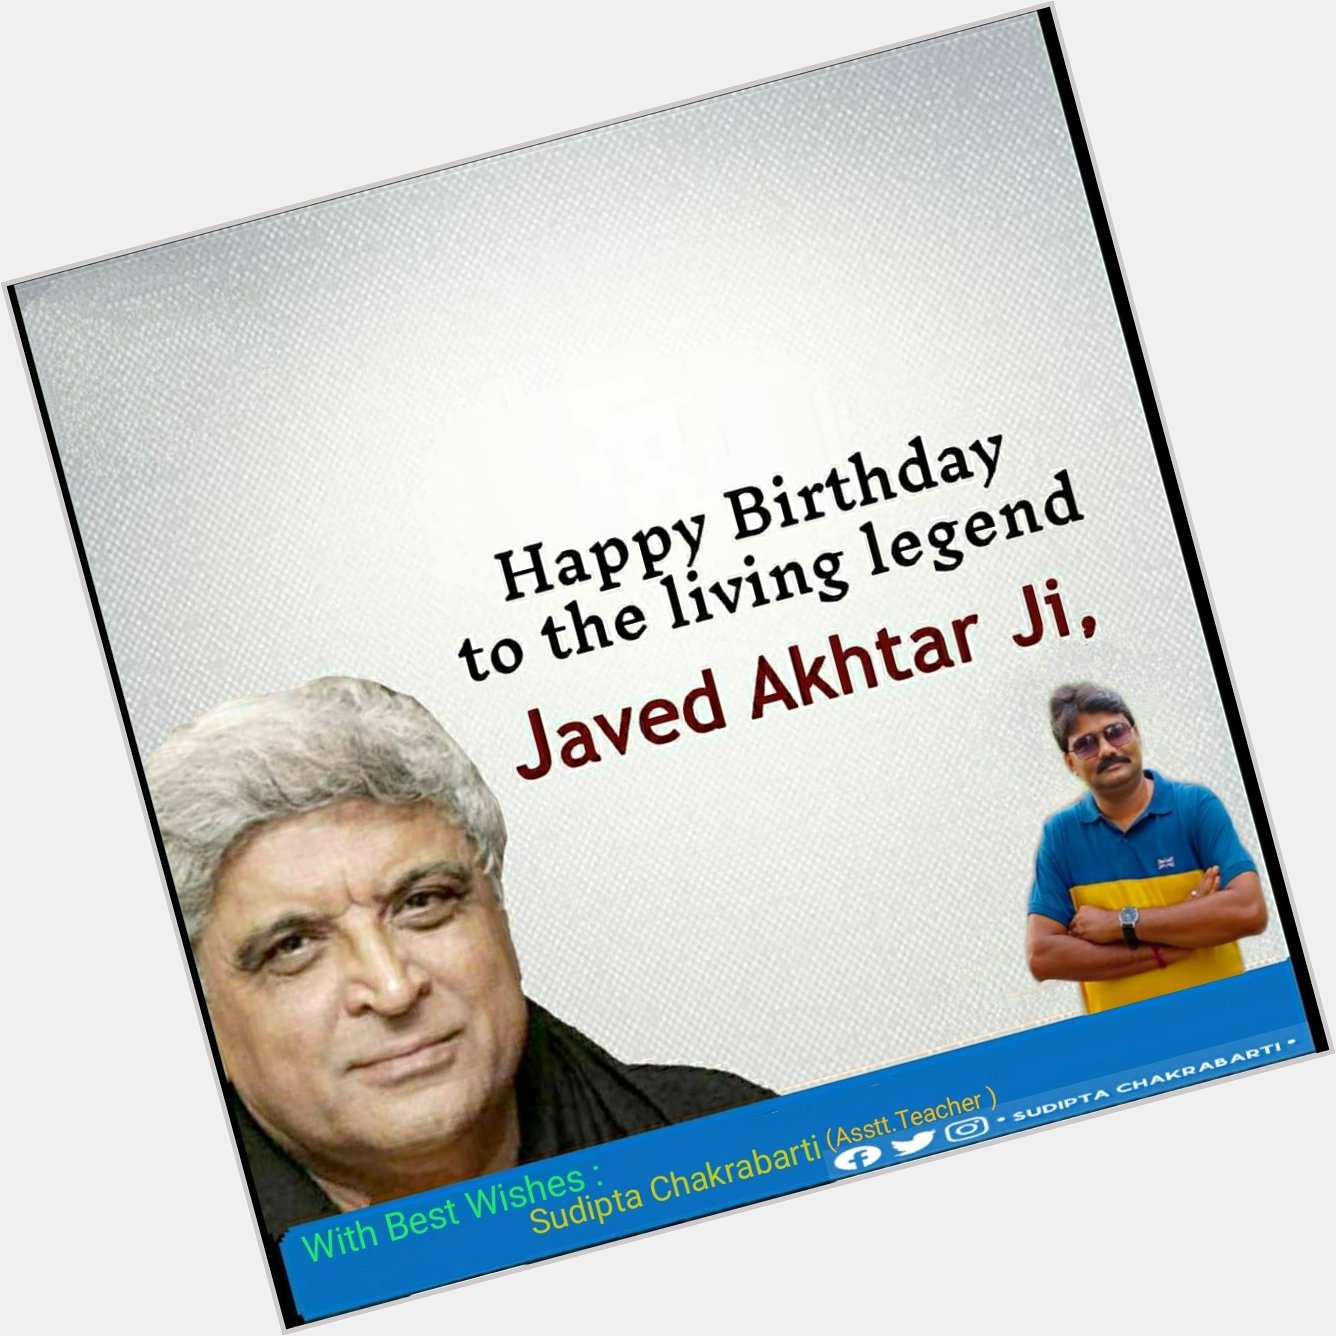 Happy Birthday to the living legend Javed Akhtar Ji.
Happy Birthday 